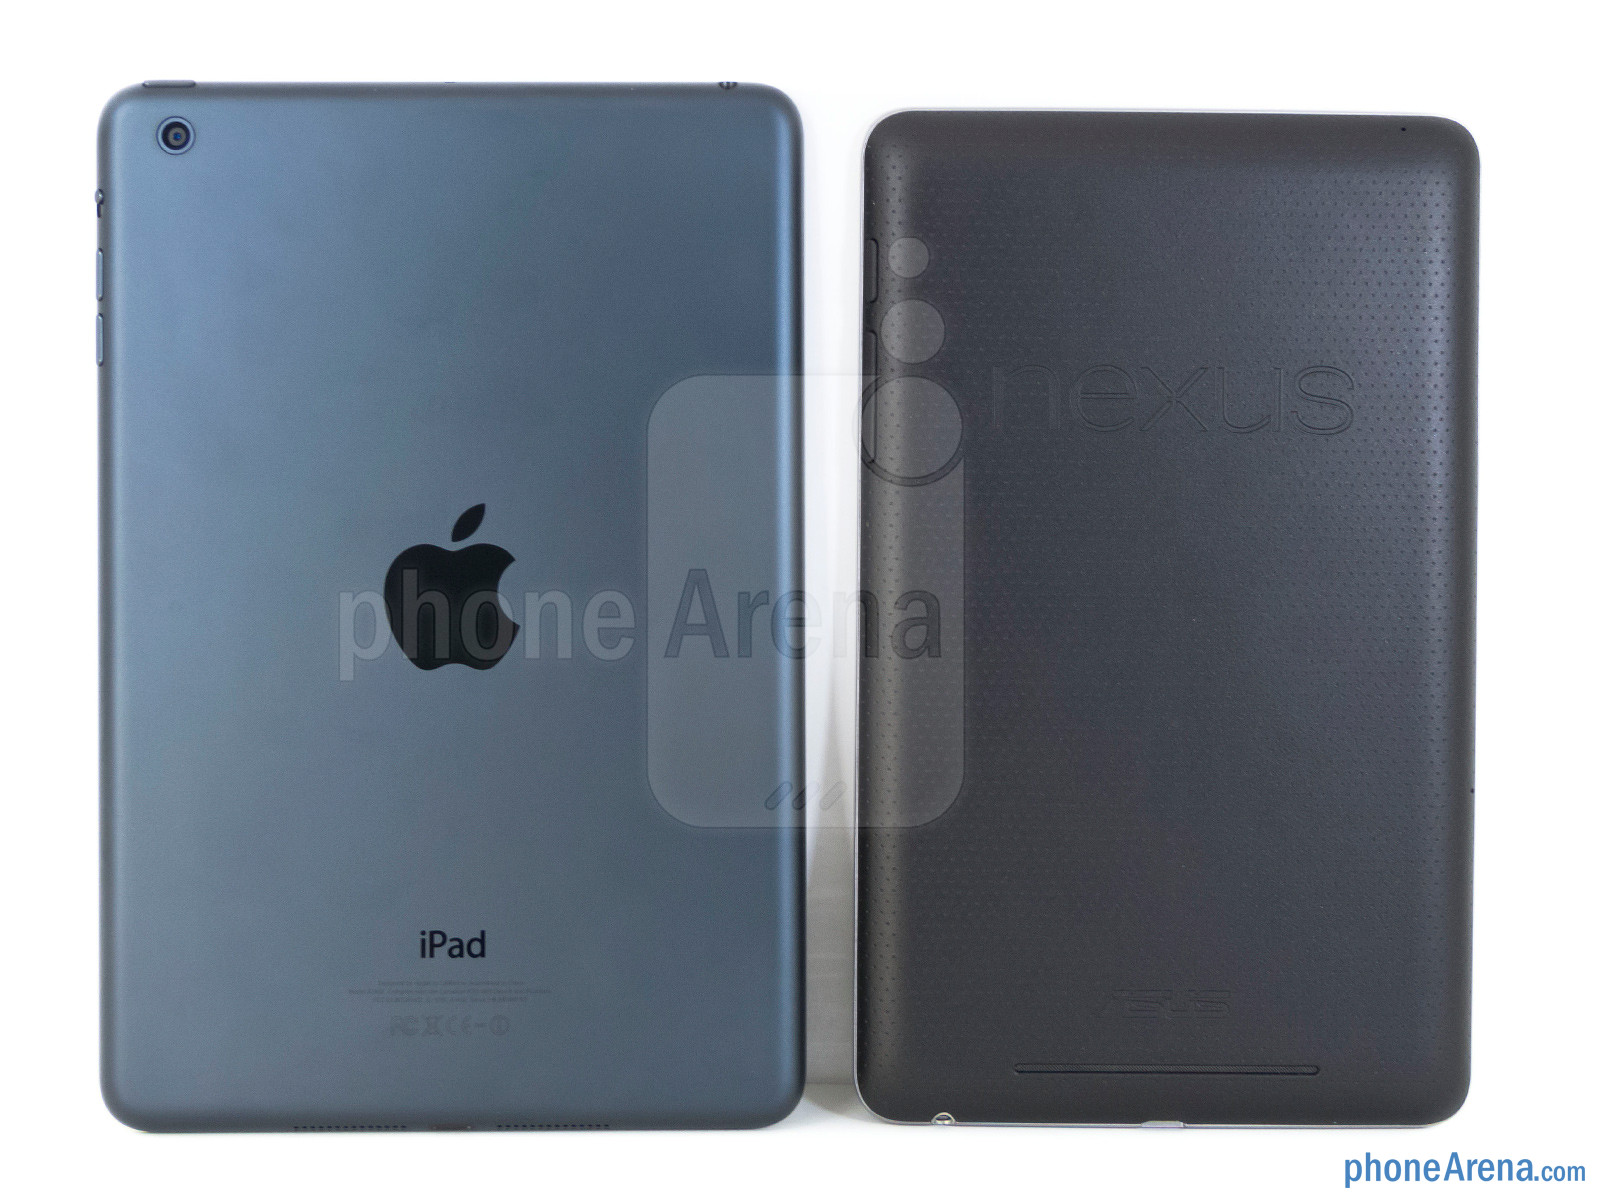 So sánh Apple iPad mini và Google Nexus 7 8